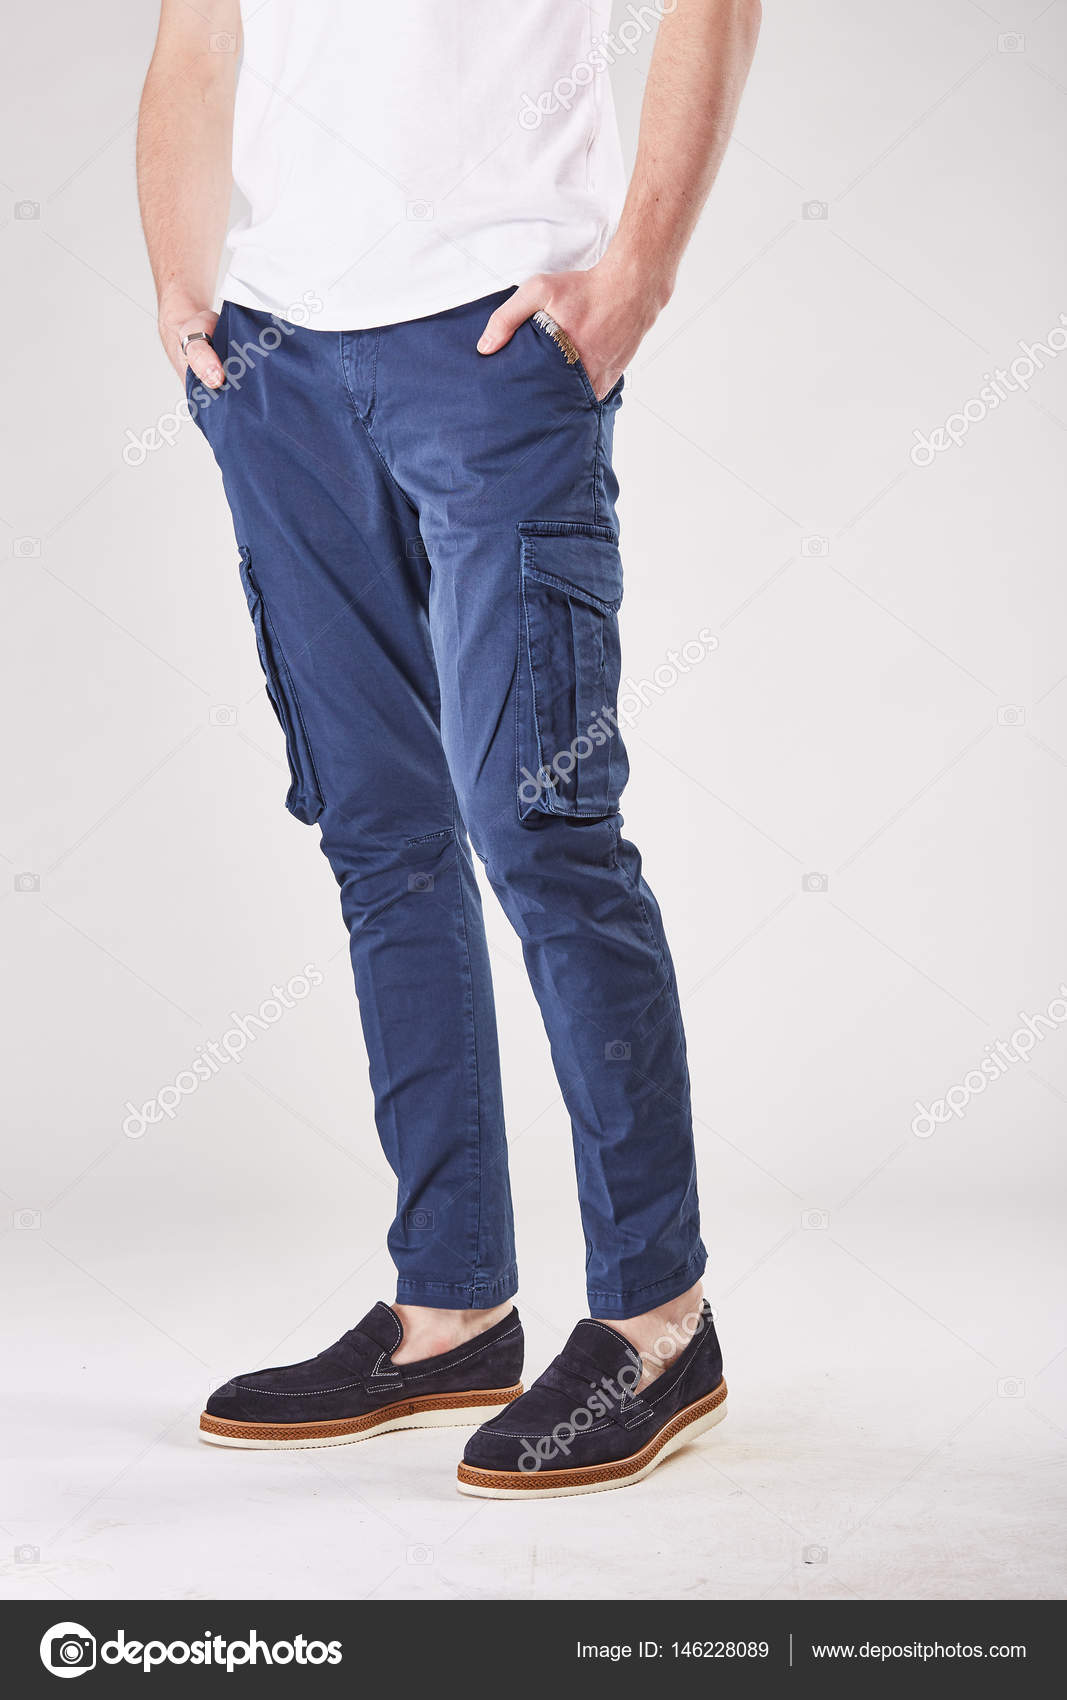 blue pants with black shoes